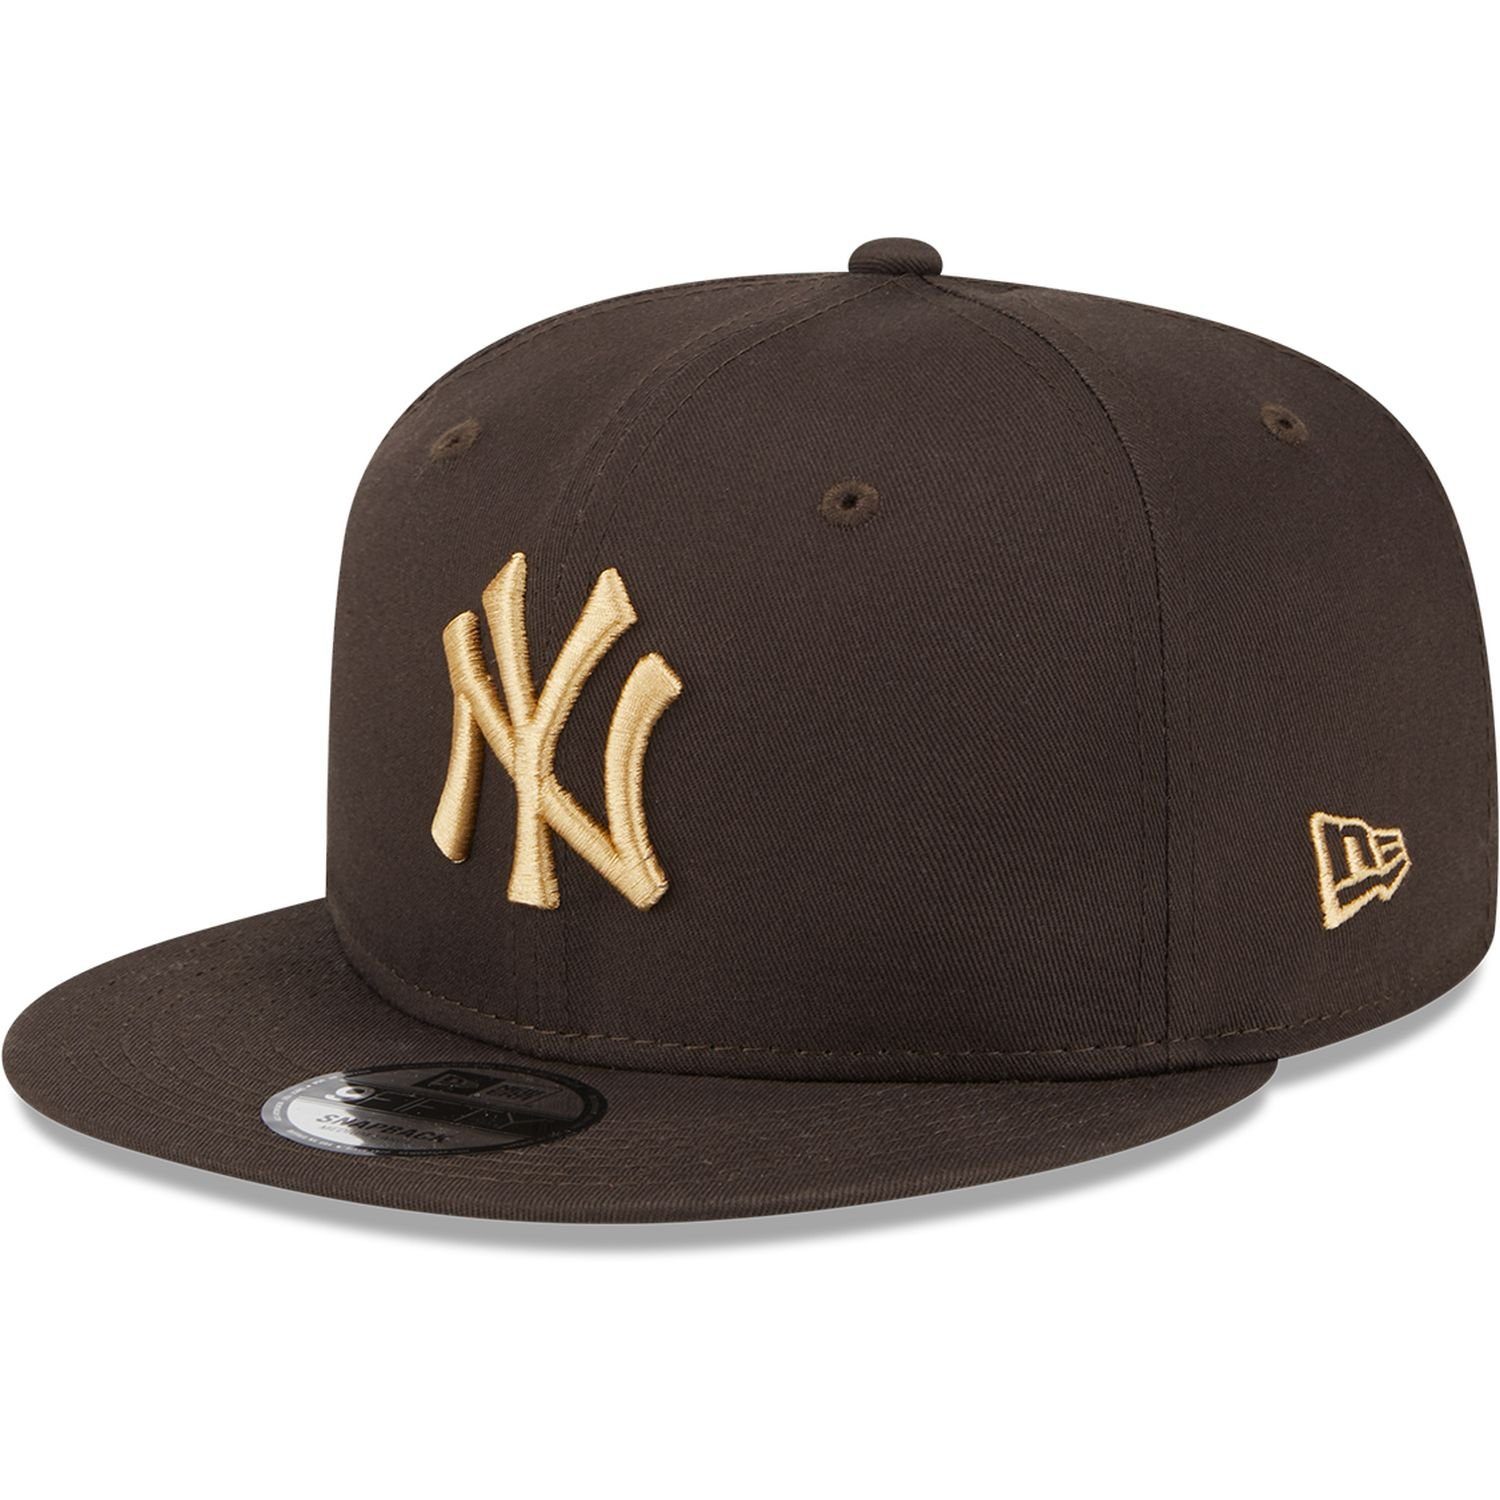 New Era New Yankees 9Fifty Snapback Cap York